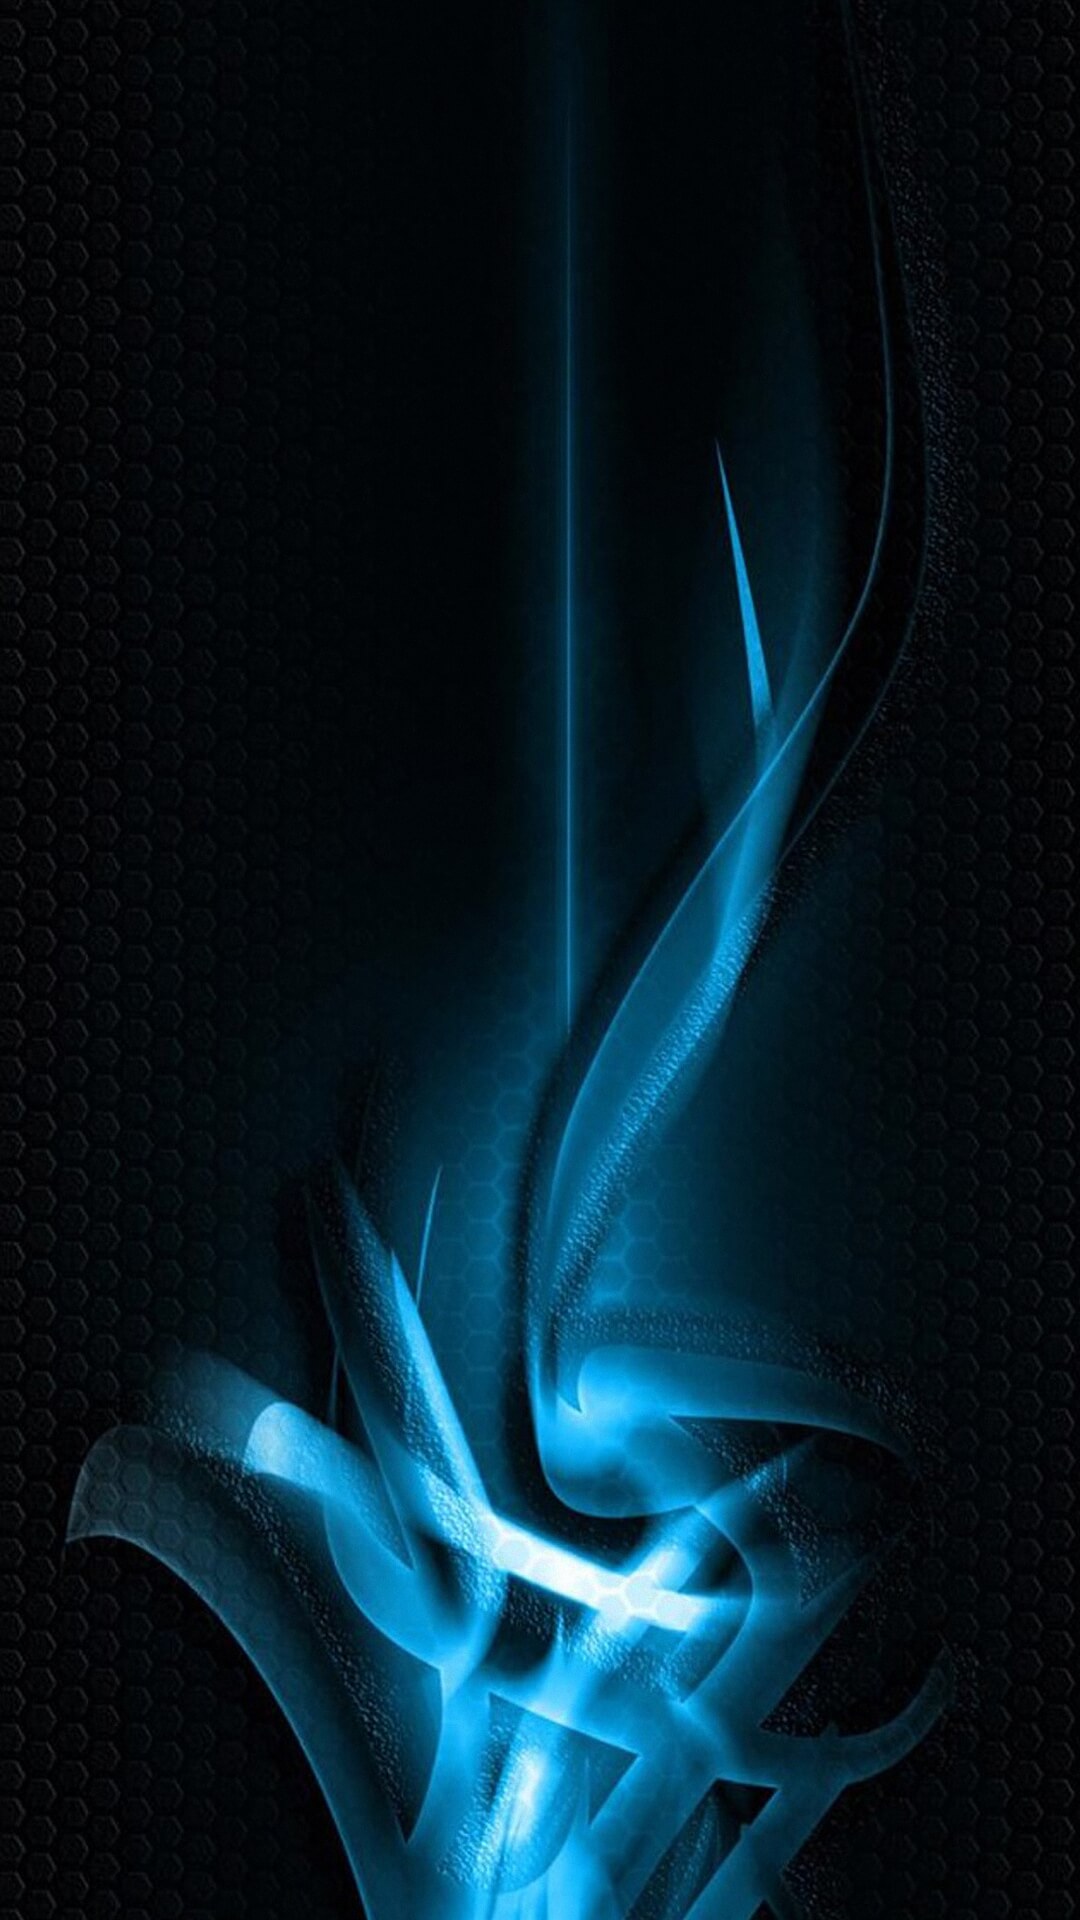 sfondi hd per iphone 6 1080p,blu,acqua,fiamma,blu elettrico,fuoco